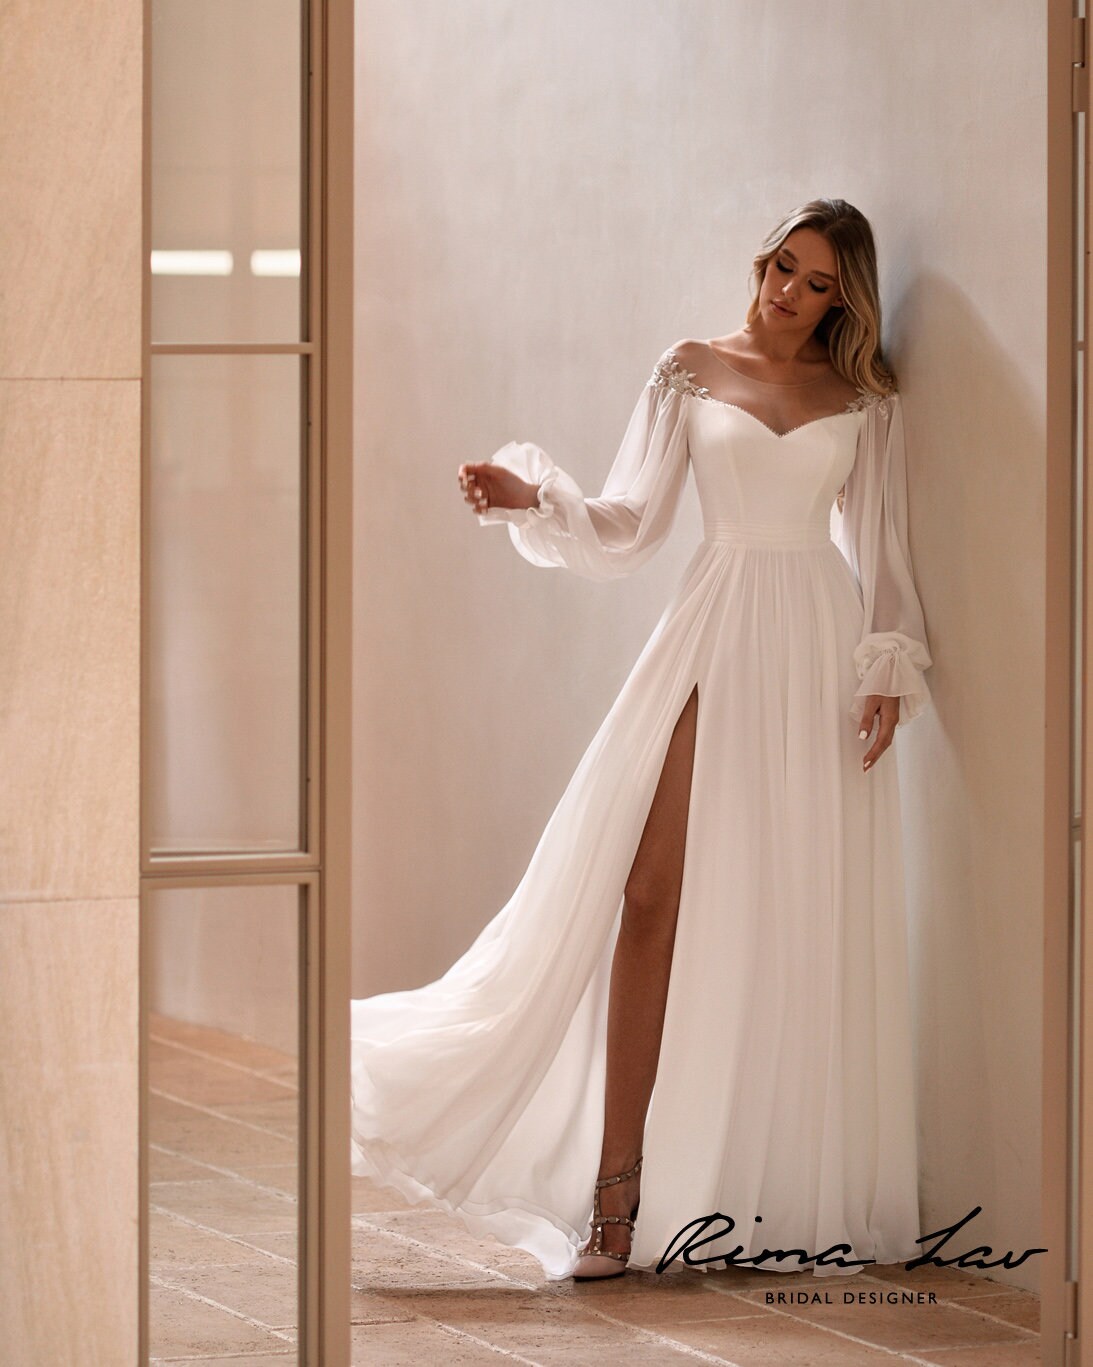 Beautiful Minimalist Long Bishop Sleeve ALine Wedding Dress Bridal Gown Side Slit Illusion Sweetheart Neckline Plus Size Short Train